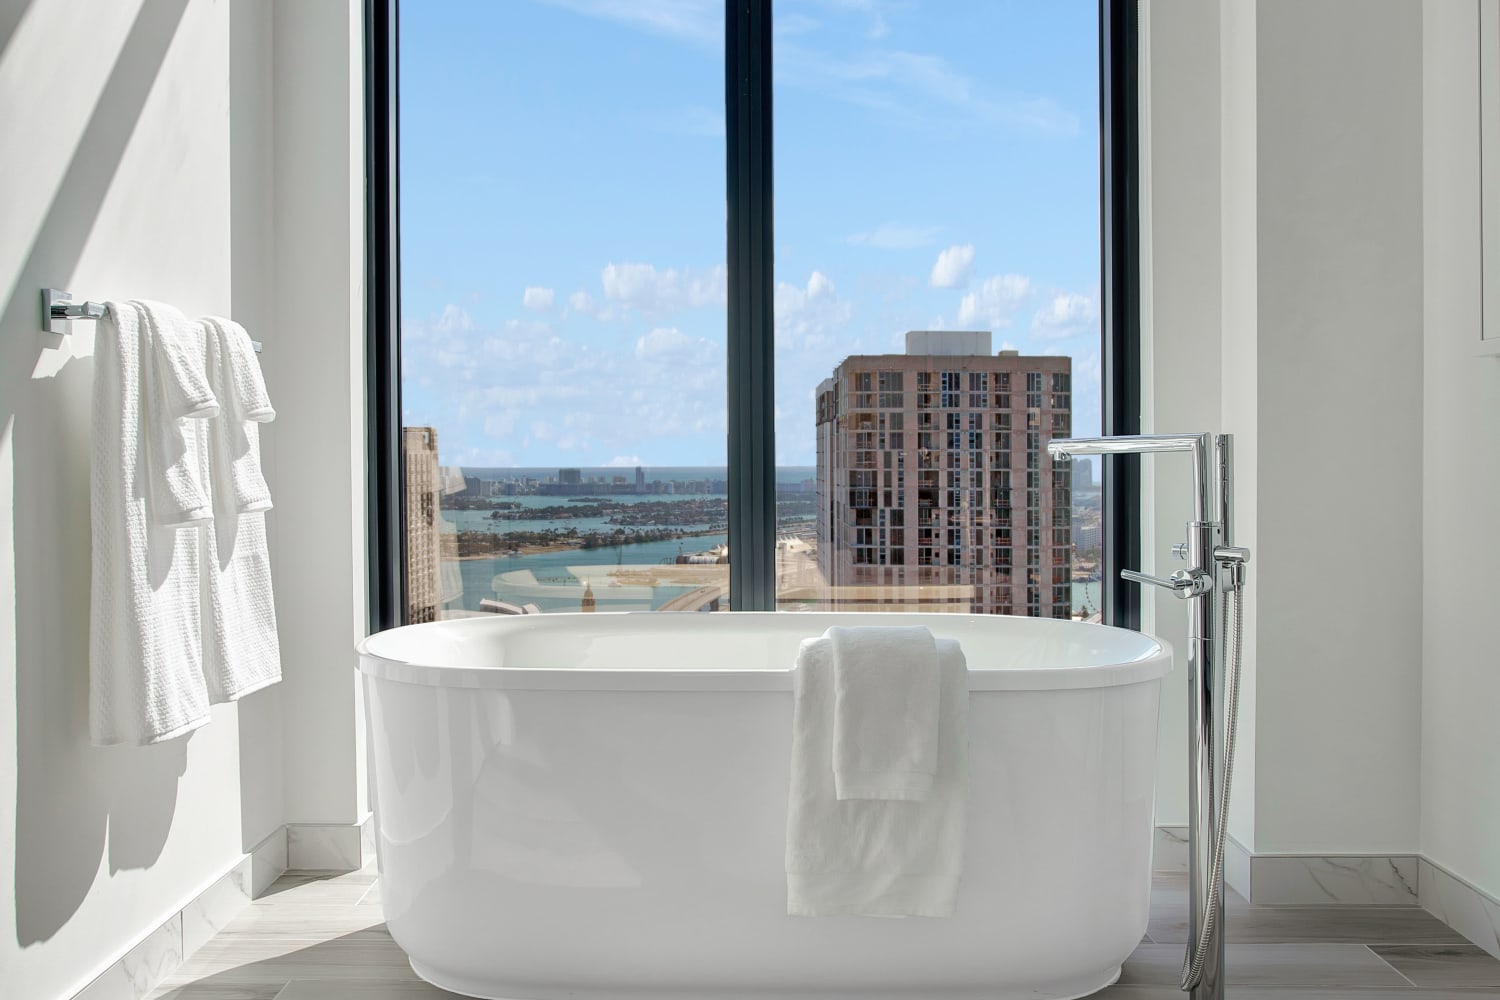 Penthouse bathroom and bath tub at ParkLine Miami in Miami, Florida